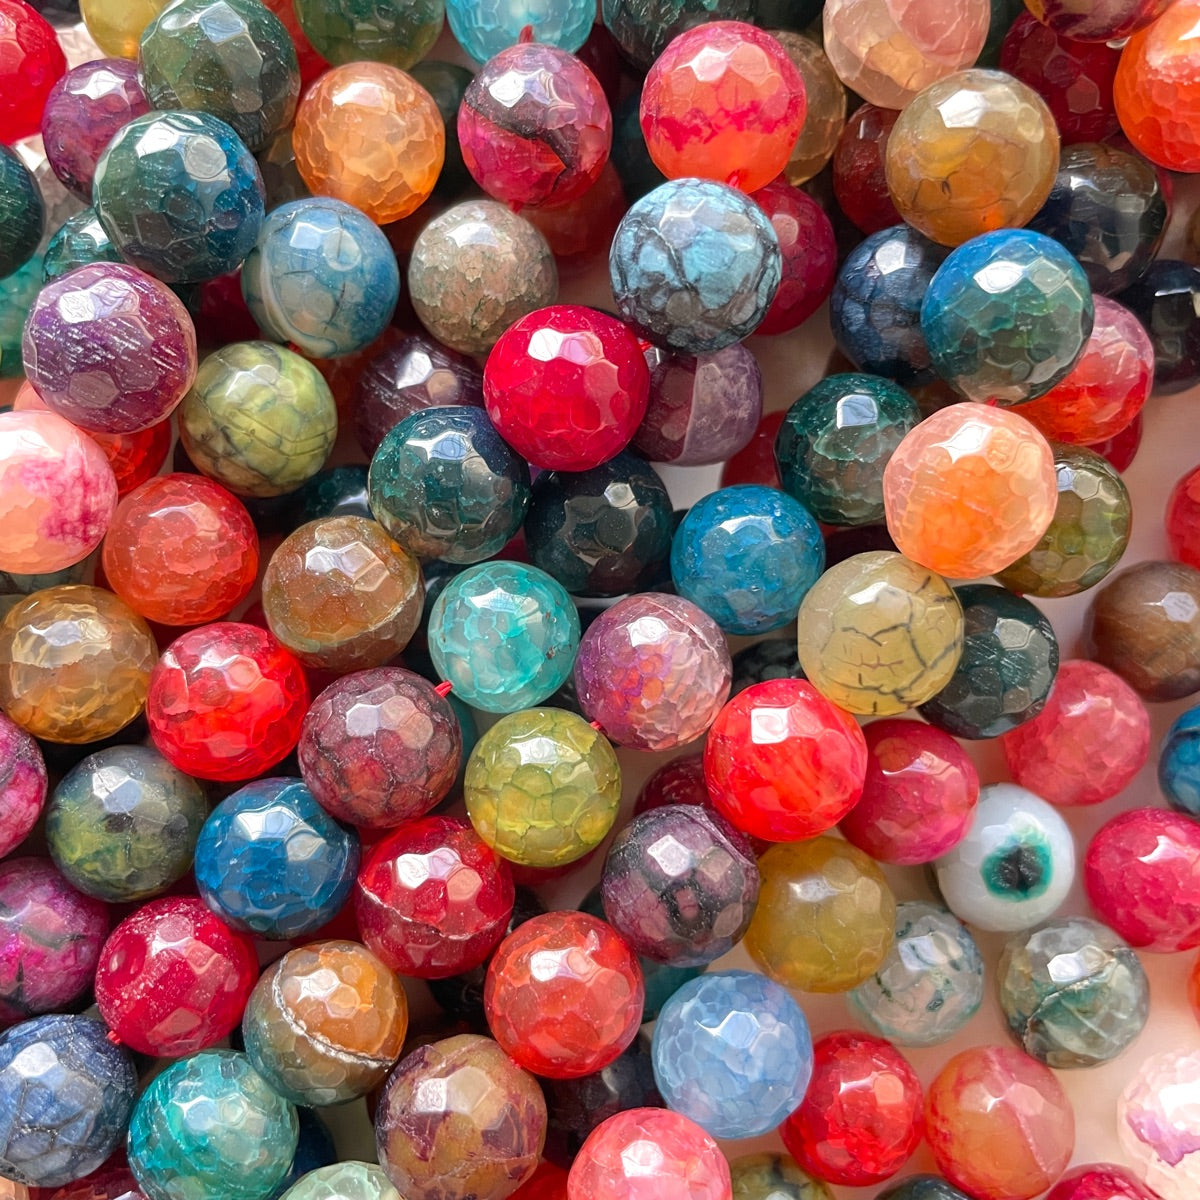 2 Strands/lot 10/12mm Multicolor Tourmaline Agate Stone Faceted Beads Stone Beads 12mm Stone Beads Faceted Agate Beads New Beads Arrivals Charms Beads Beyond